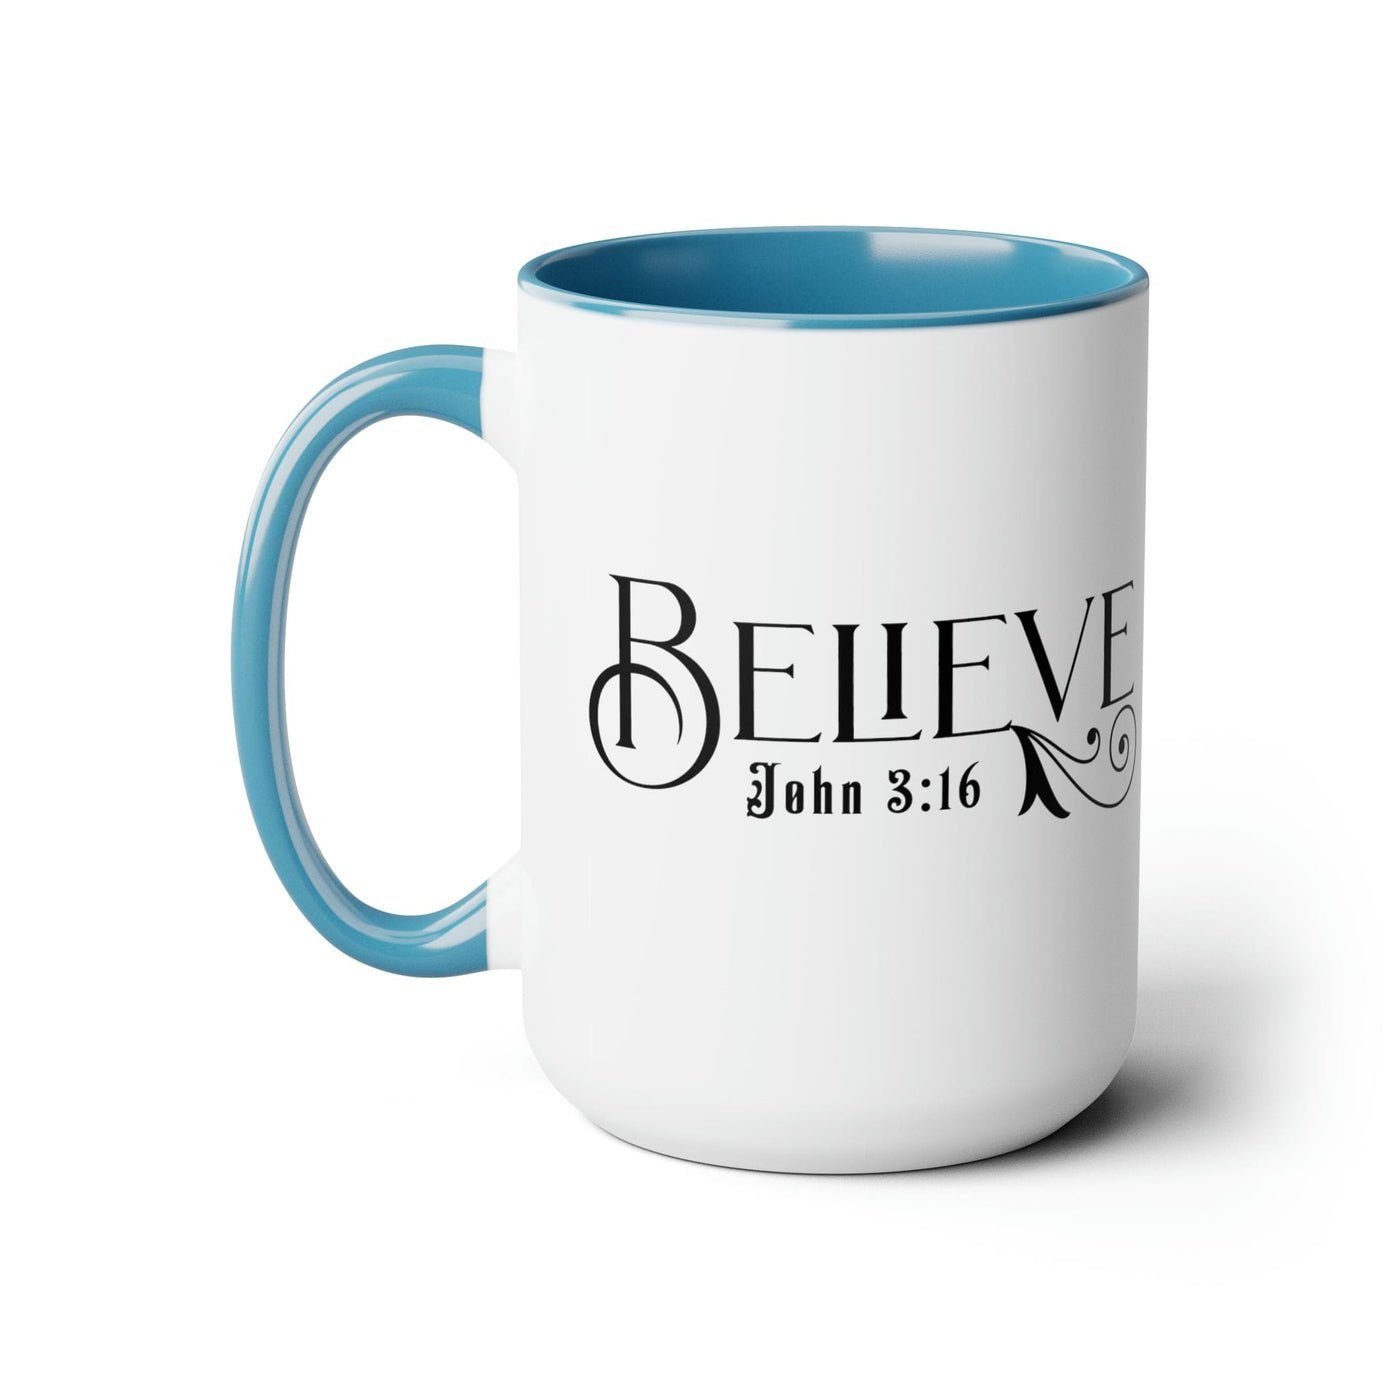 Accent Ceramic Coffee Mug 15oz - Believe John 3:16 Black Illustration